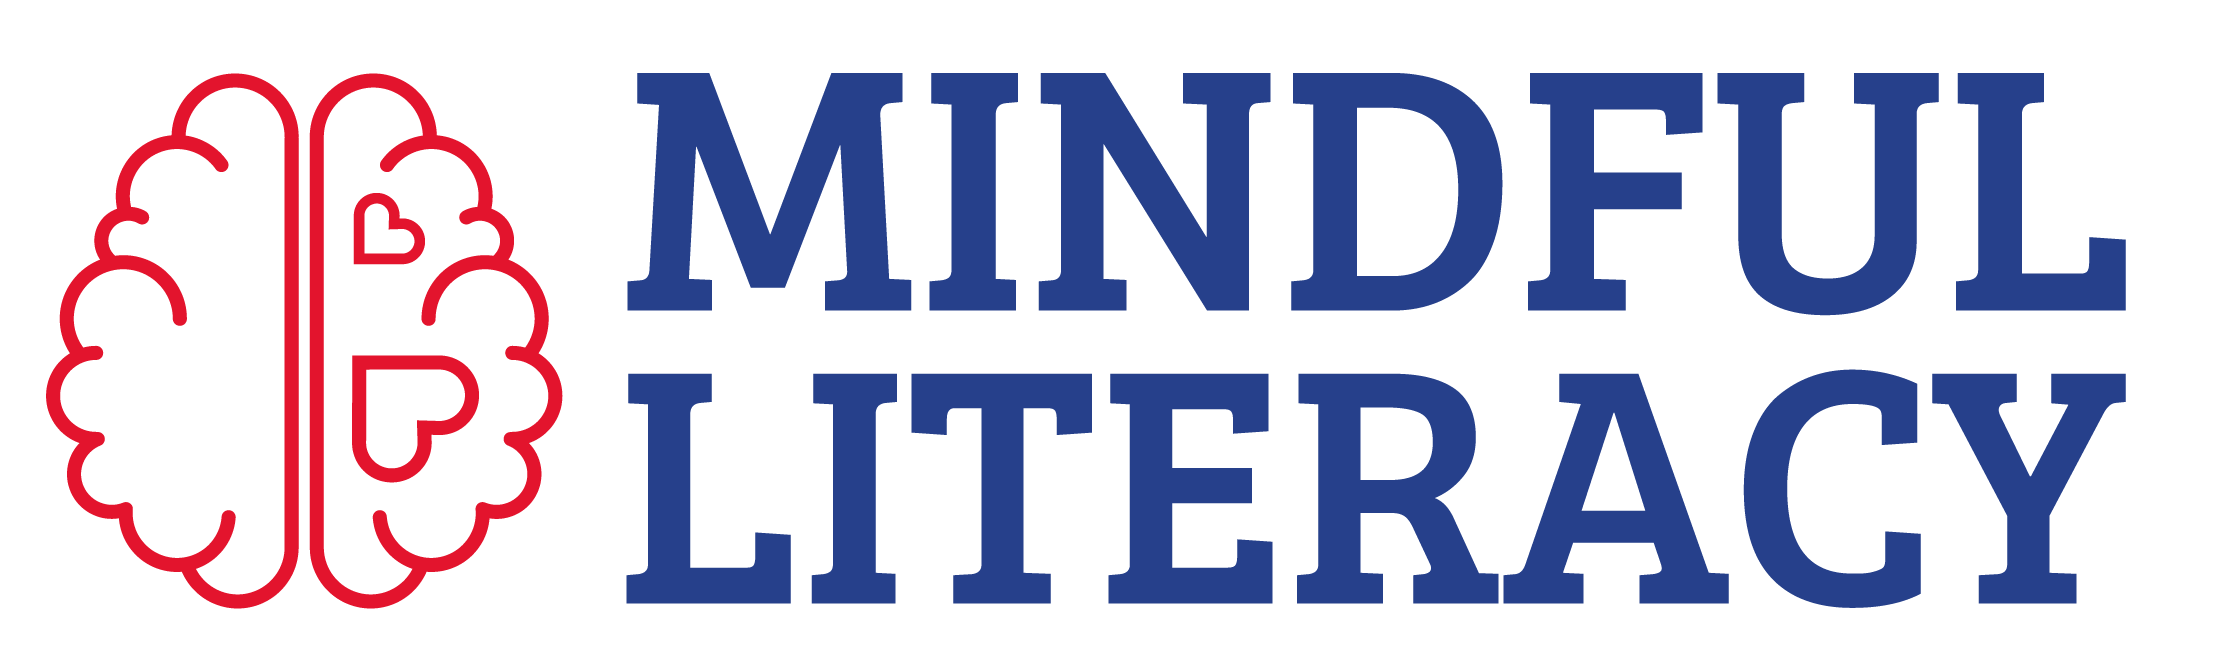 Mindful Literacy Practice logo